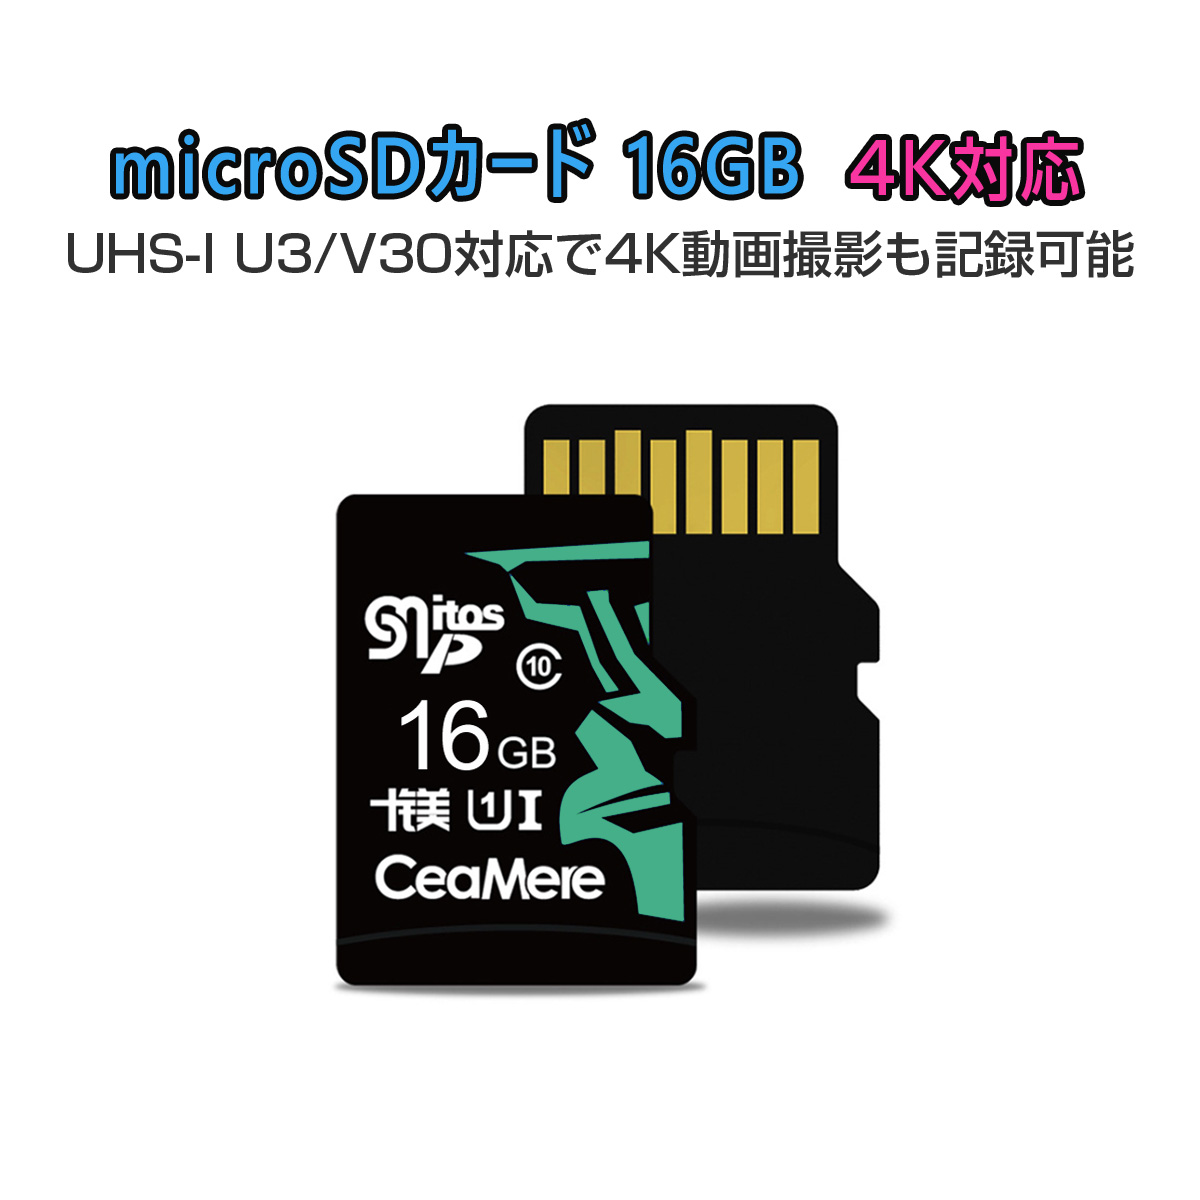 MicroSDカード 16GB UHS-I V30 超高速 最大90MB/sec 3D MLC NAND採用 ASチップ 高耐久 MicroSD マイクロSD microSDXC 300x SDカード変換アダプタ USBカードリーダー付き SDM便送料無料 6ヶ月保証